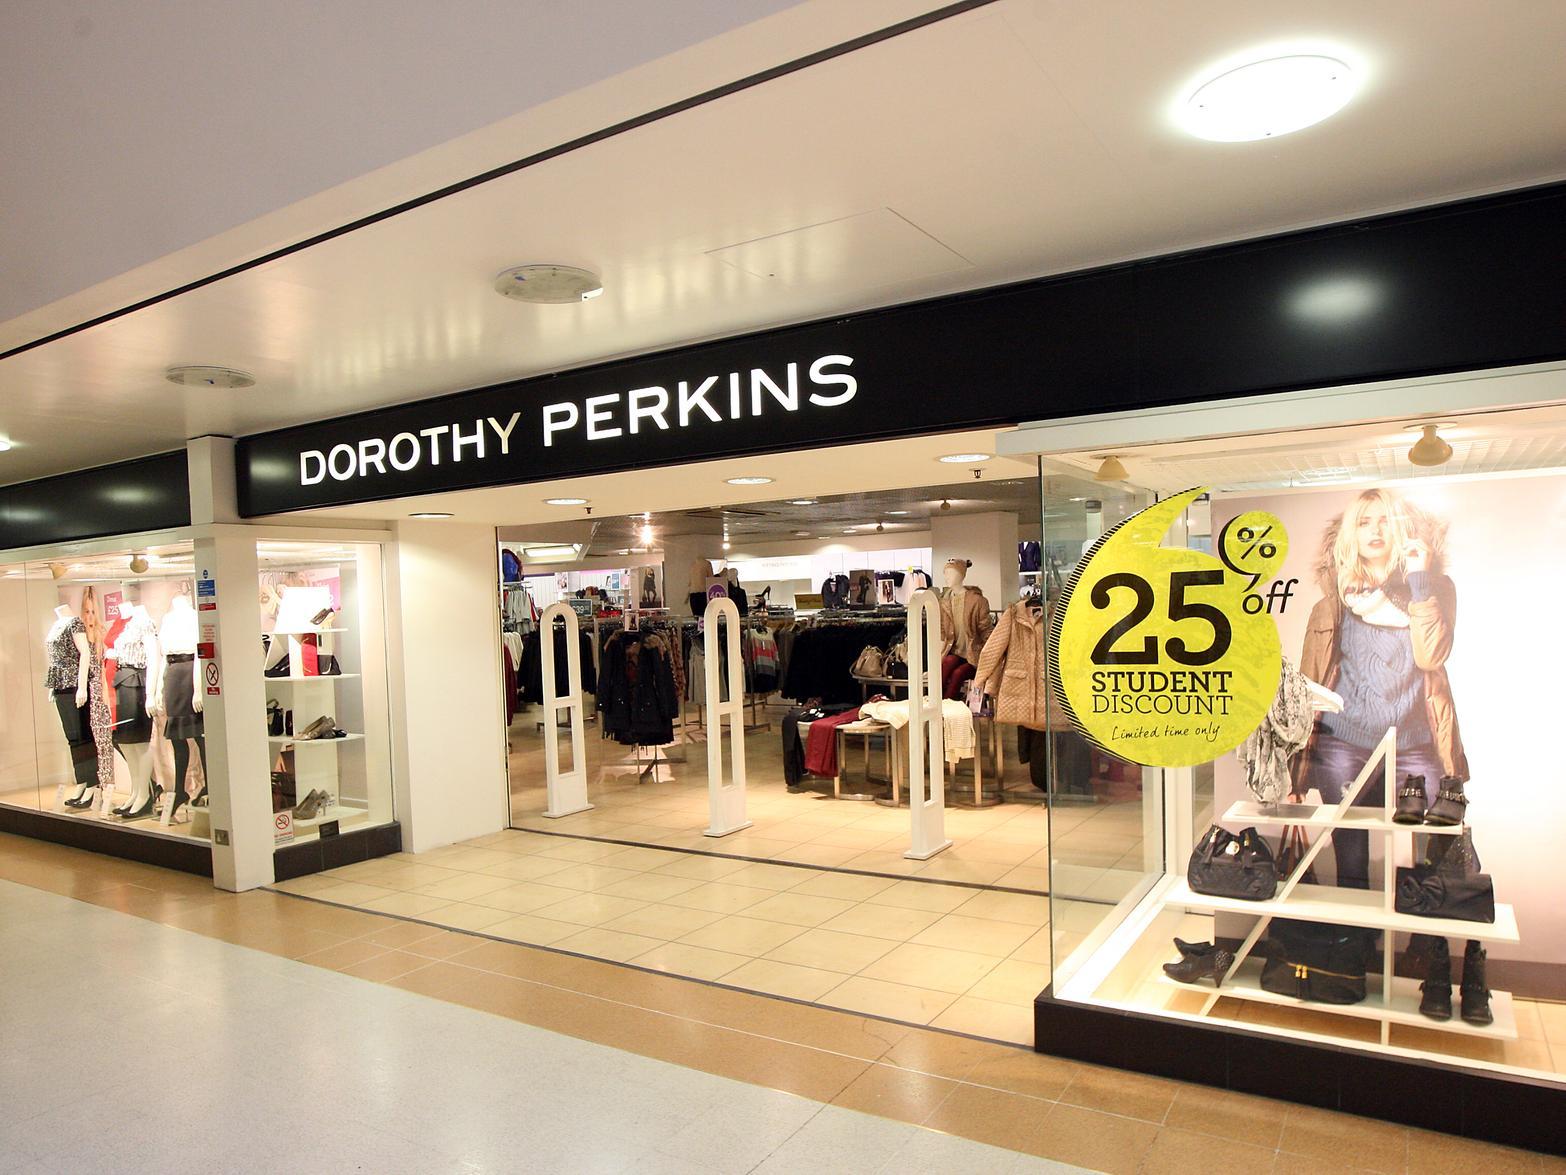 Dorothy Perkins in Market Walk Shopping Centre shut its doors in February 2019